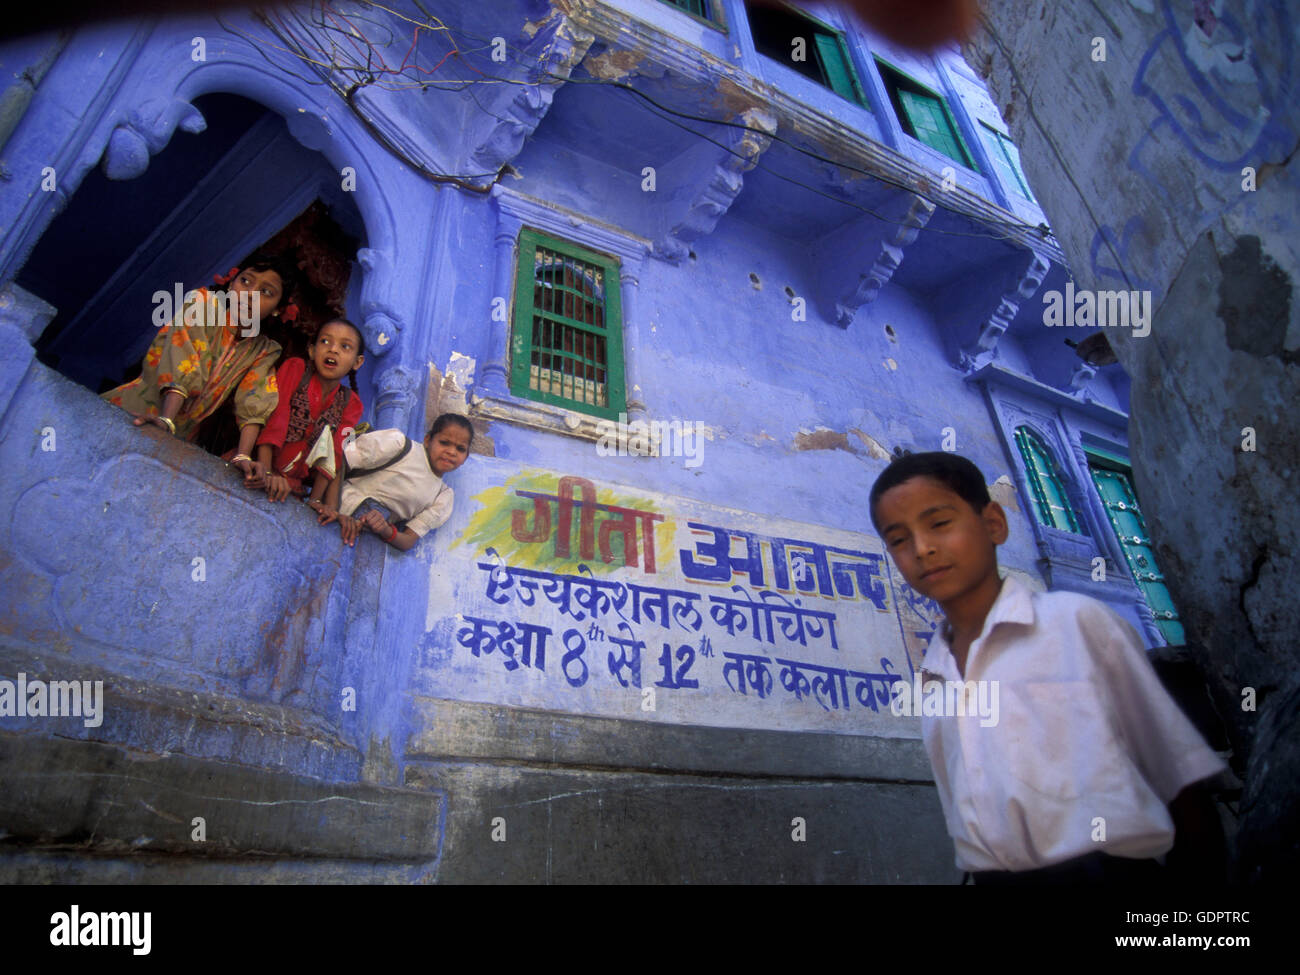 La città blu nella città vecchia di Jodhpur in Rajasthan in India. Foto Stock